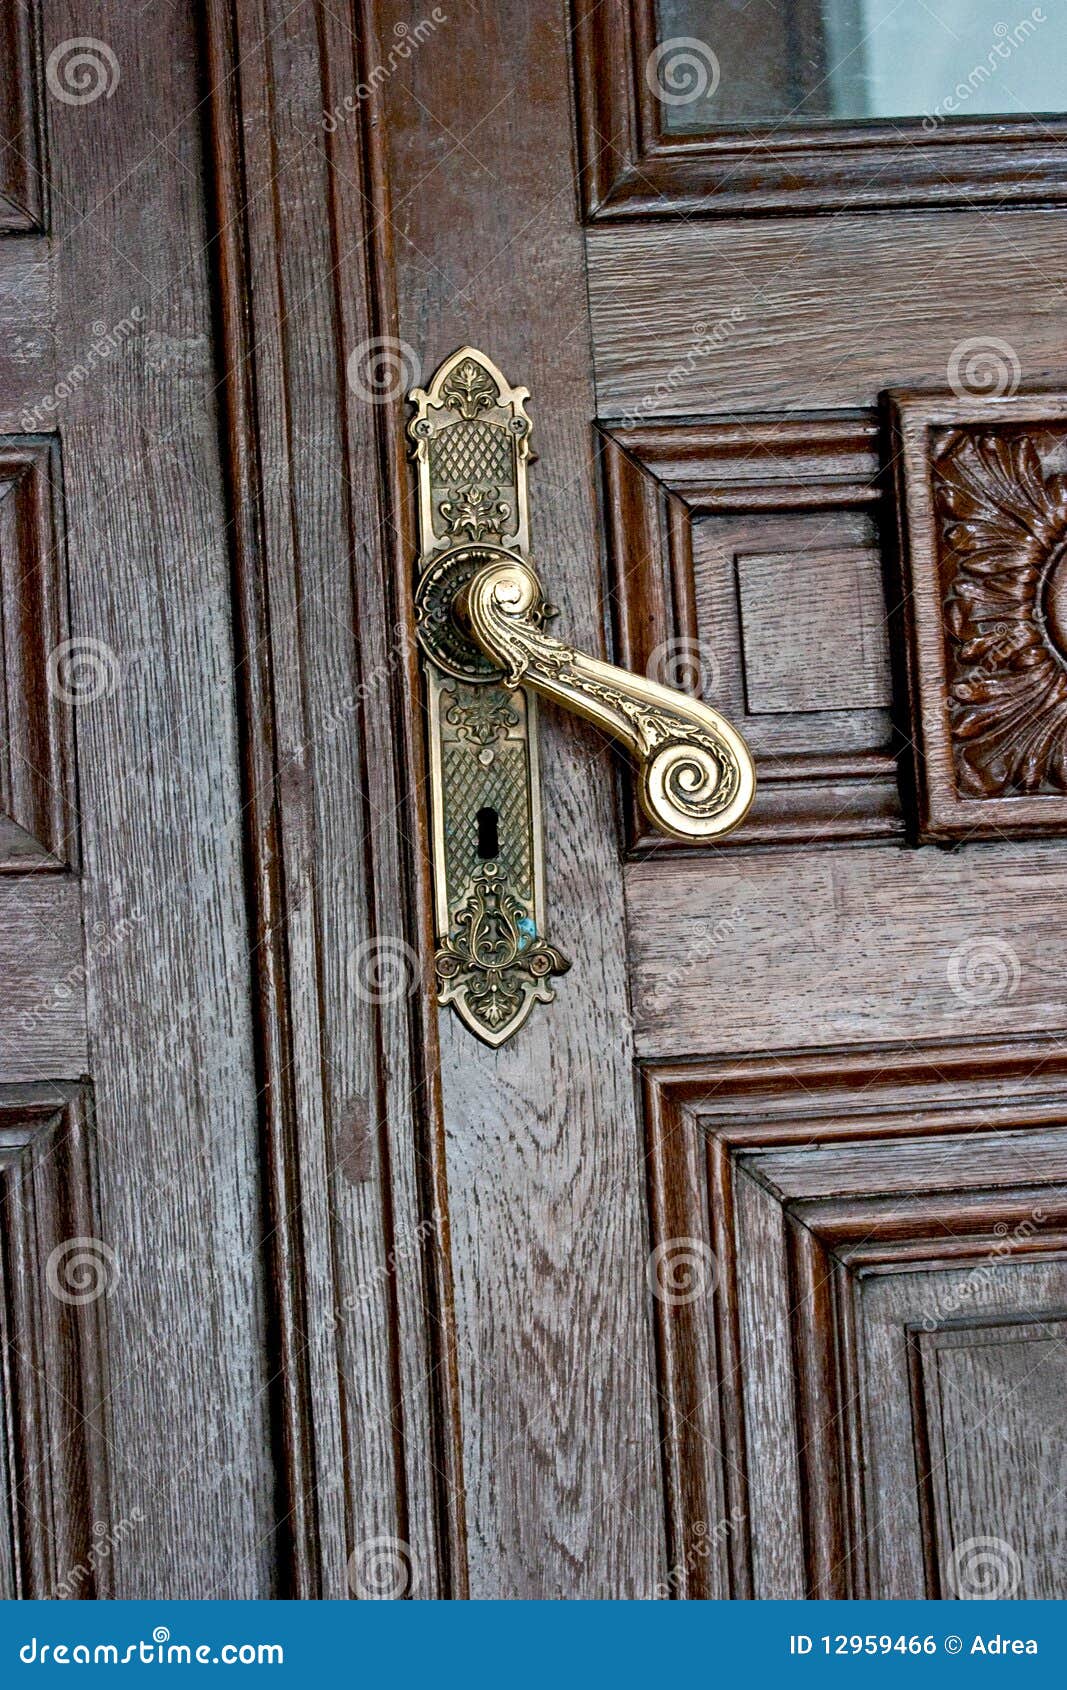 Carved metallic door knot stock photo. Image of raised - 12959466